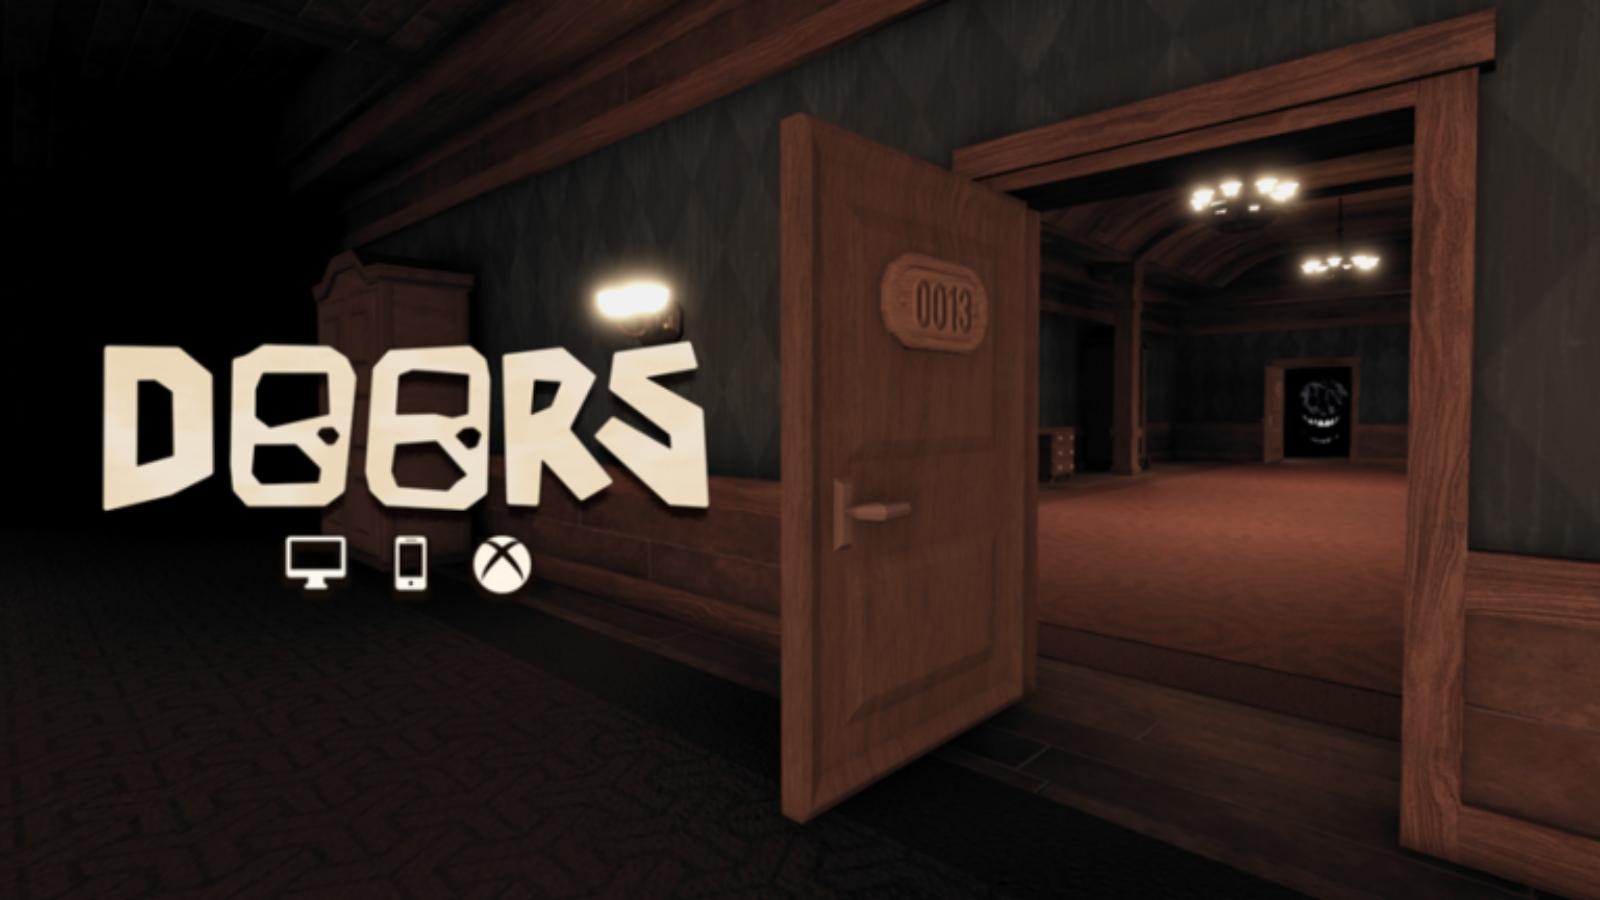 NEW* ALL WORKING CODES FOR DOORS 2022! ROBLOX DOORS CODES 